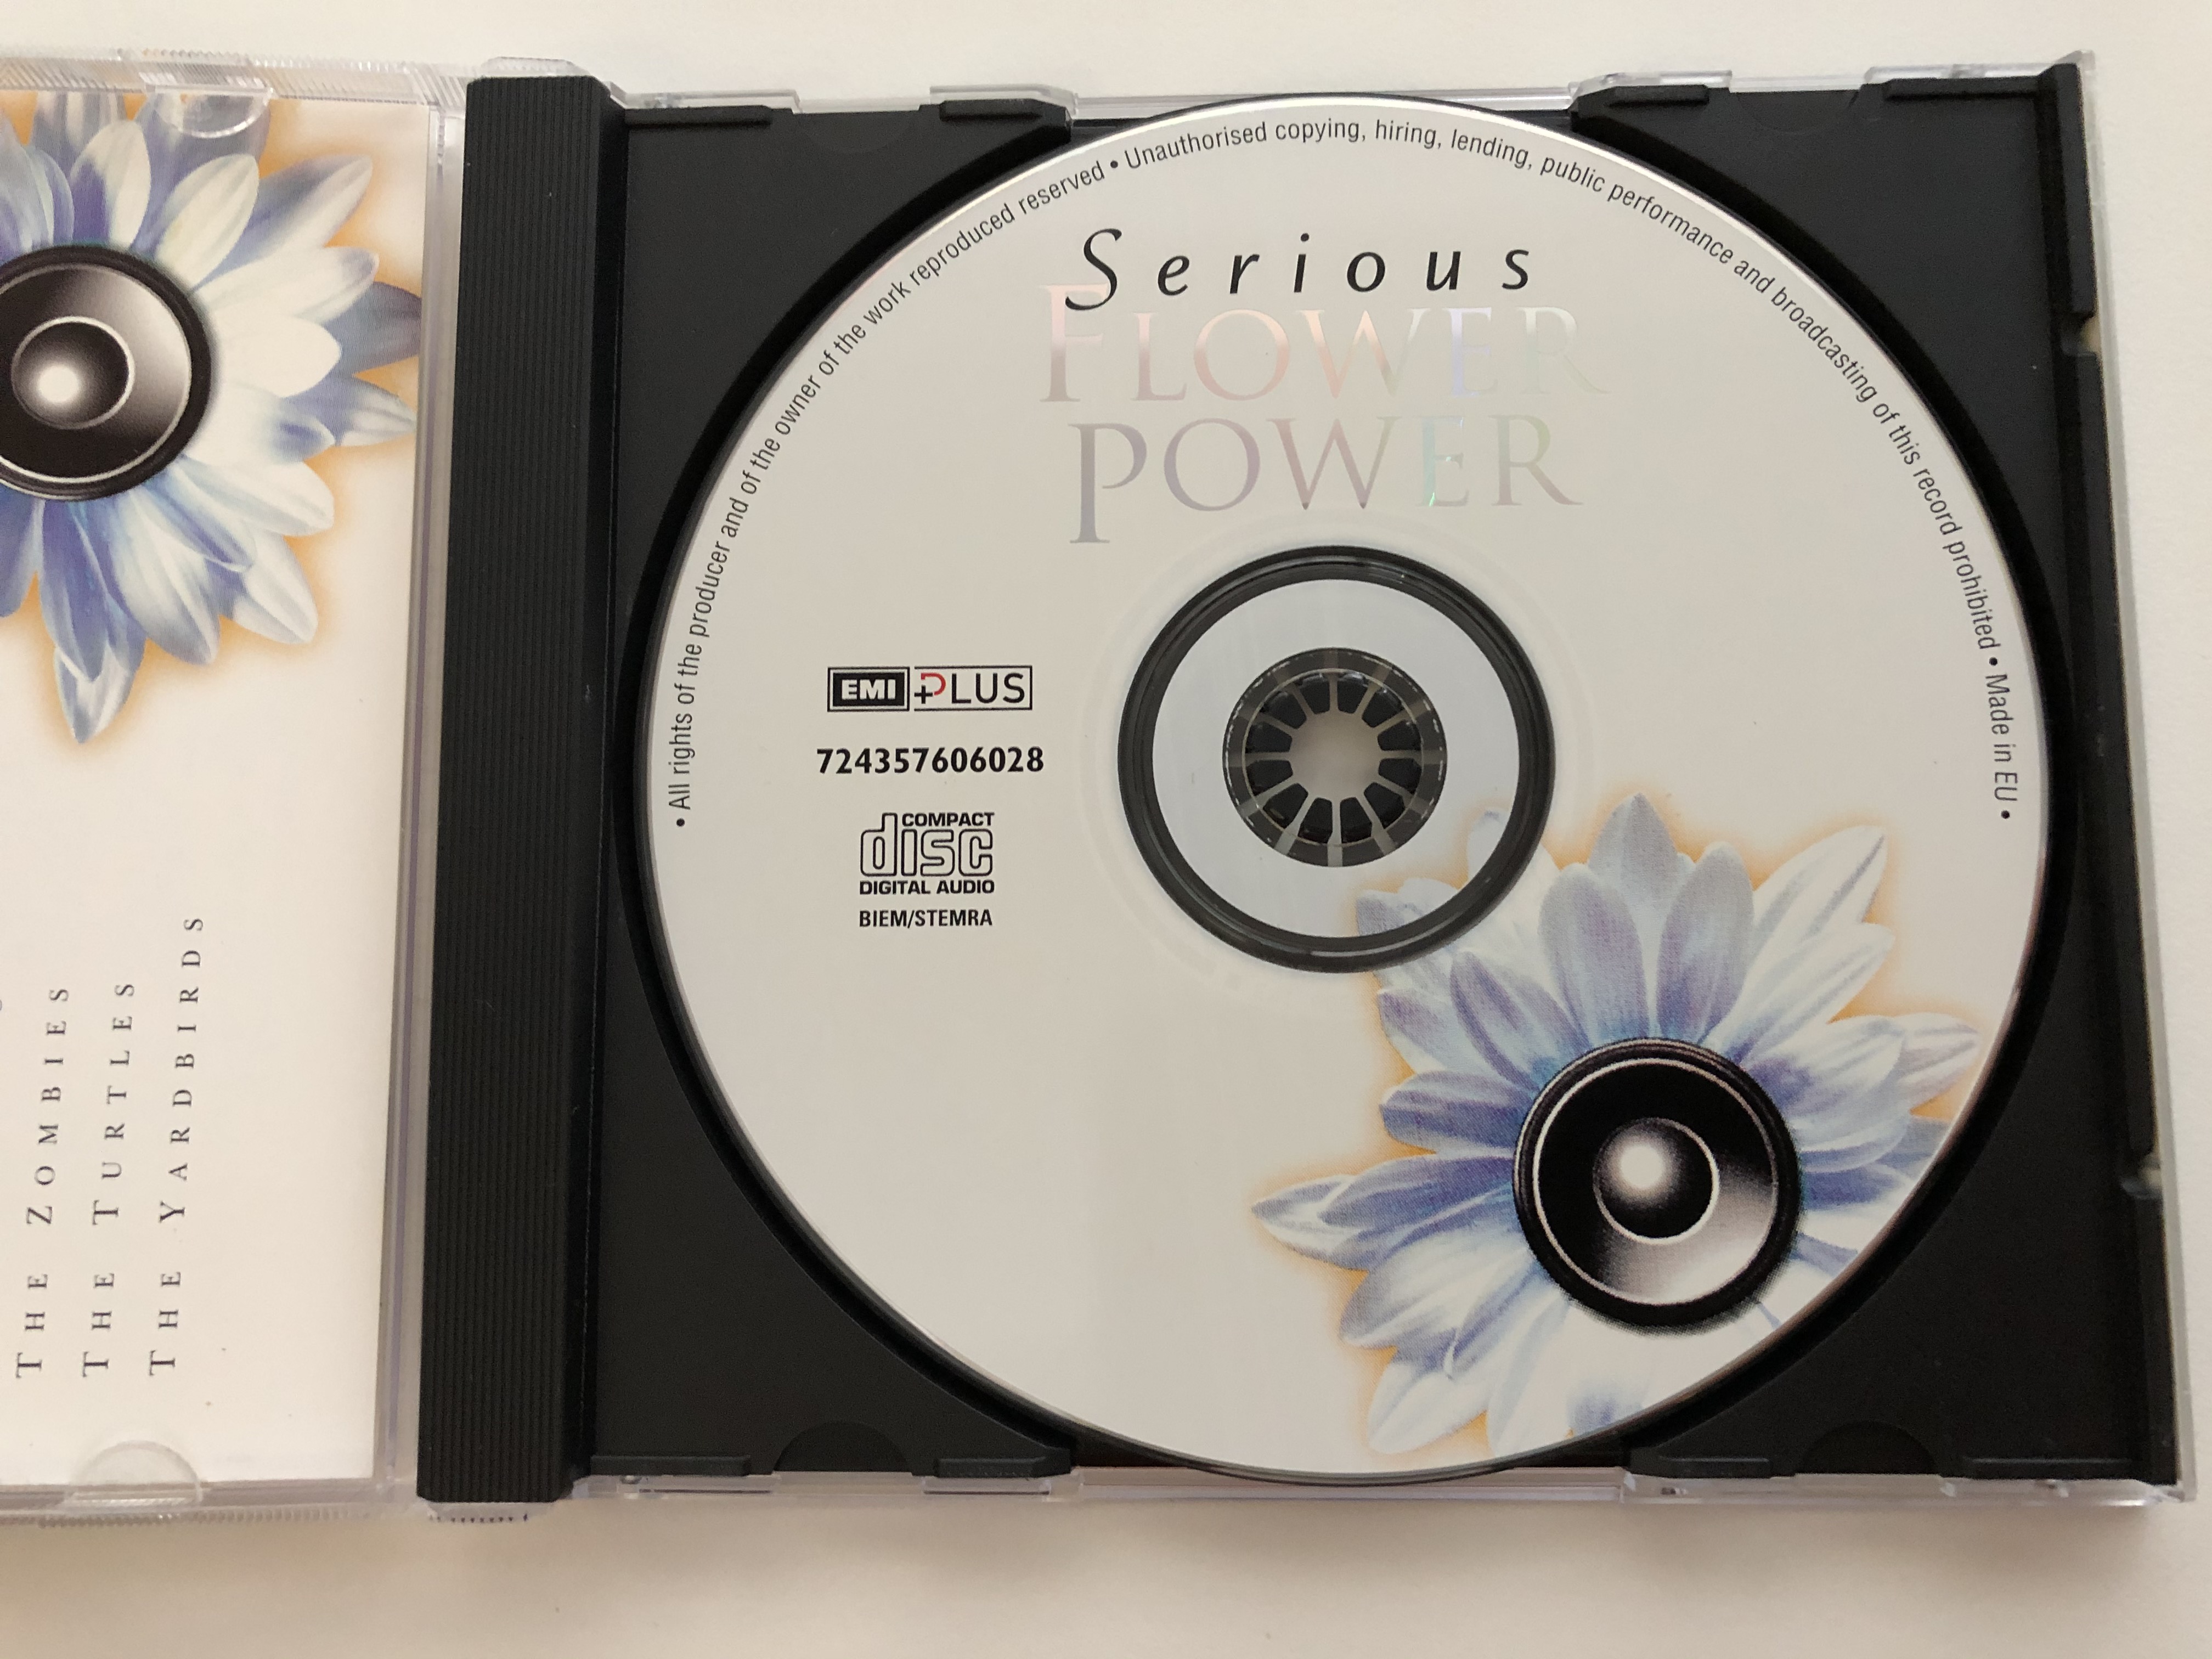 serious-flower-power-emi-plus-audio-cd-2000-724357606028-2-.jpg